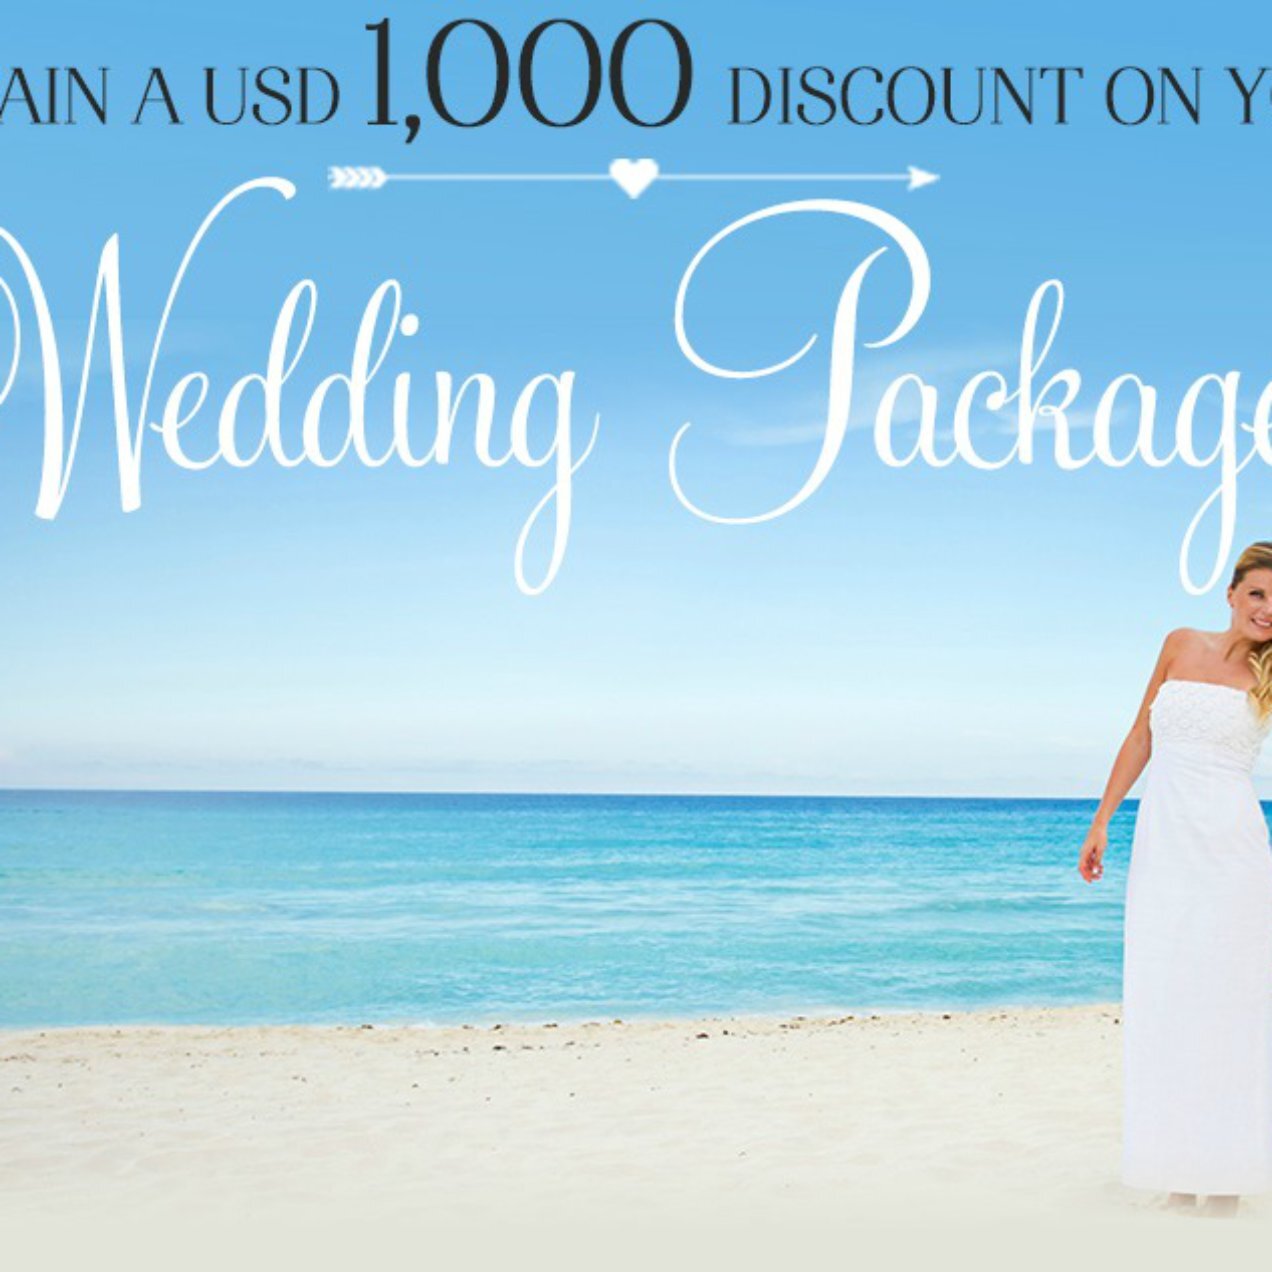 Sandos Wedding Package Deals for 2015